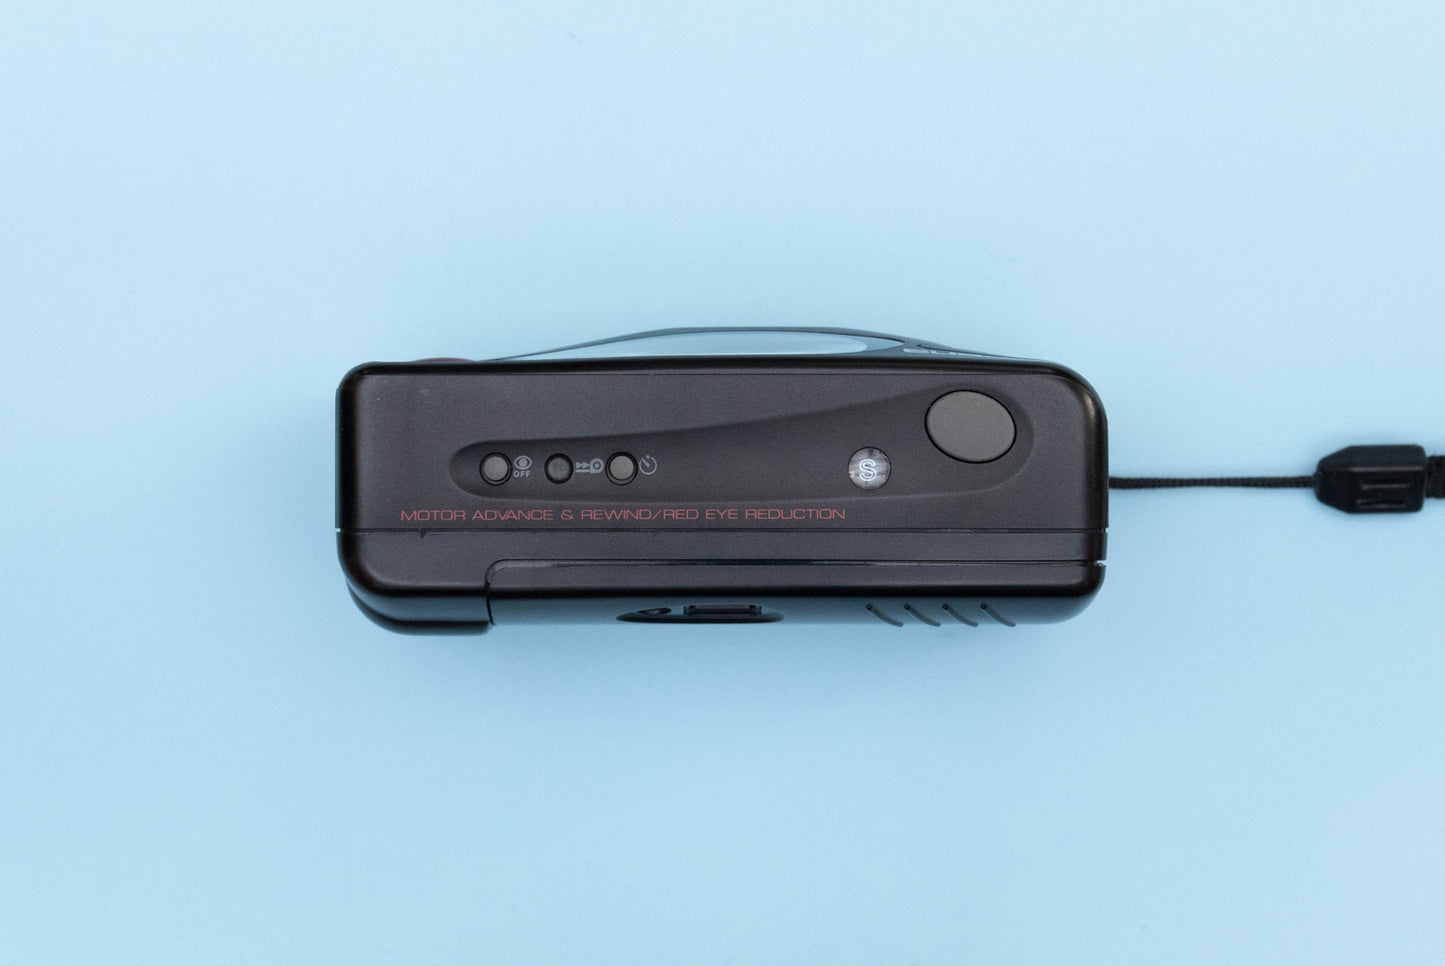 Carena Super Mini Compact Point and Shoot 35mm Film Camera